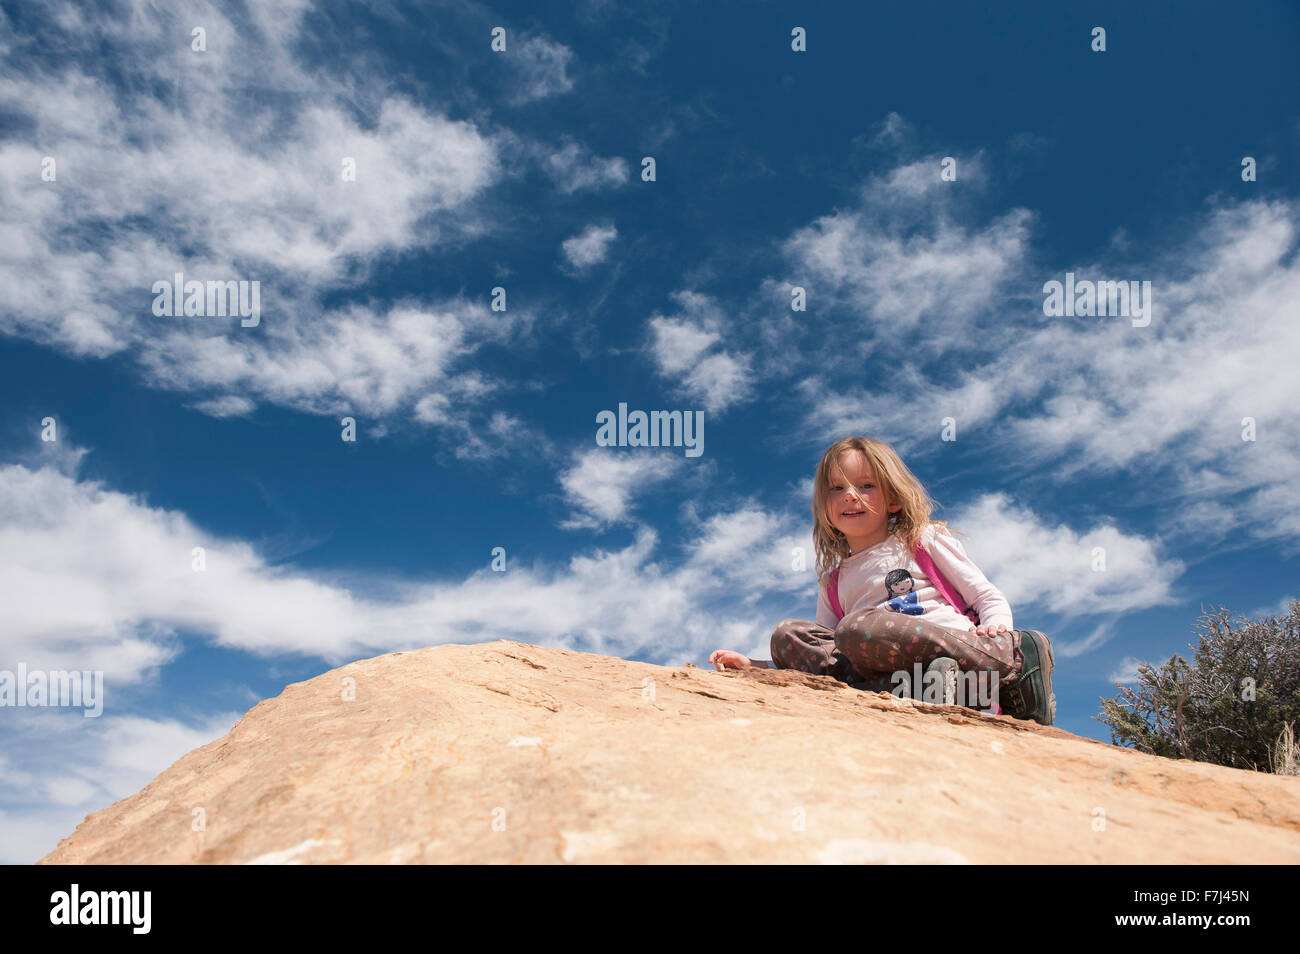 Little girl sitting on top of rock, portrait Stock Photo